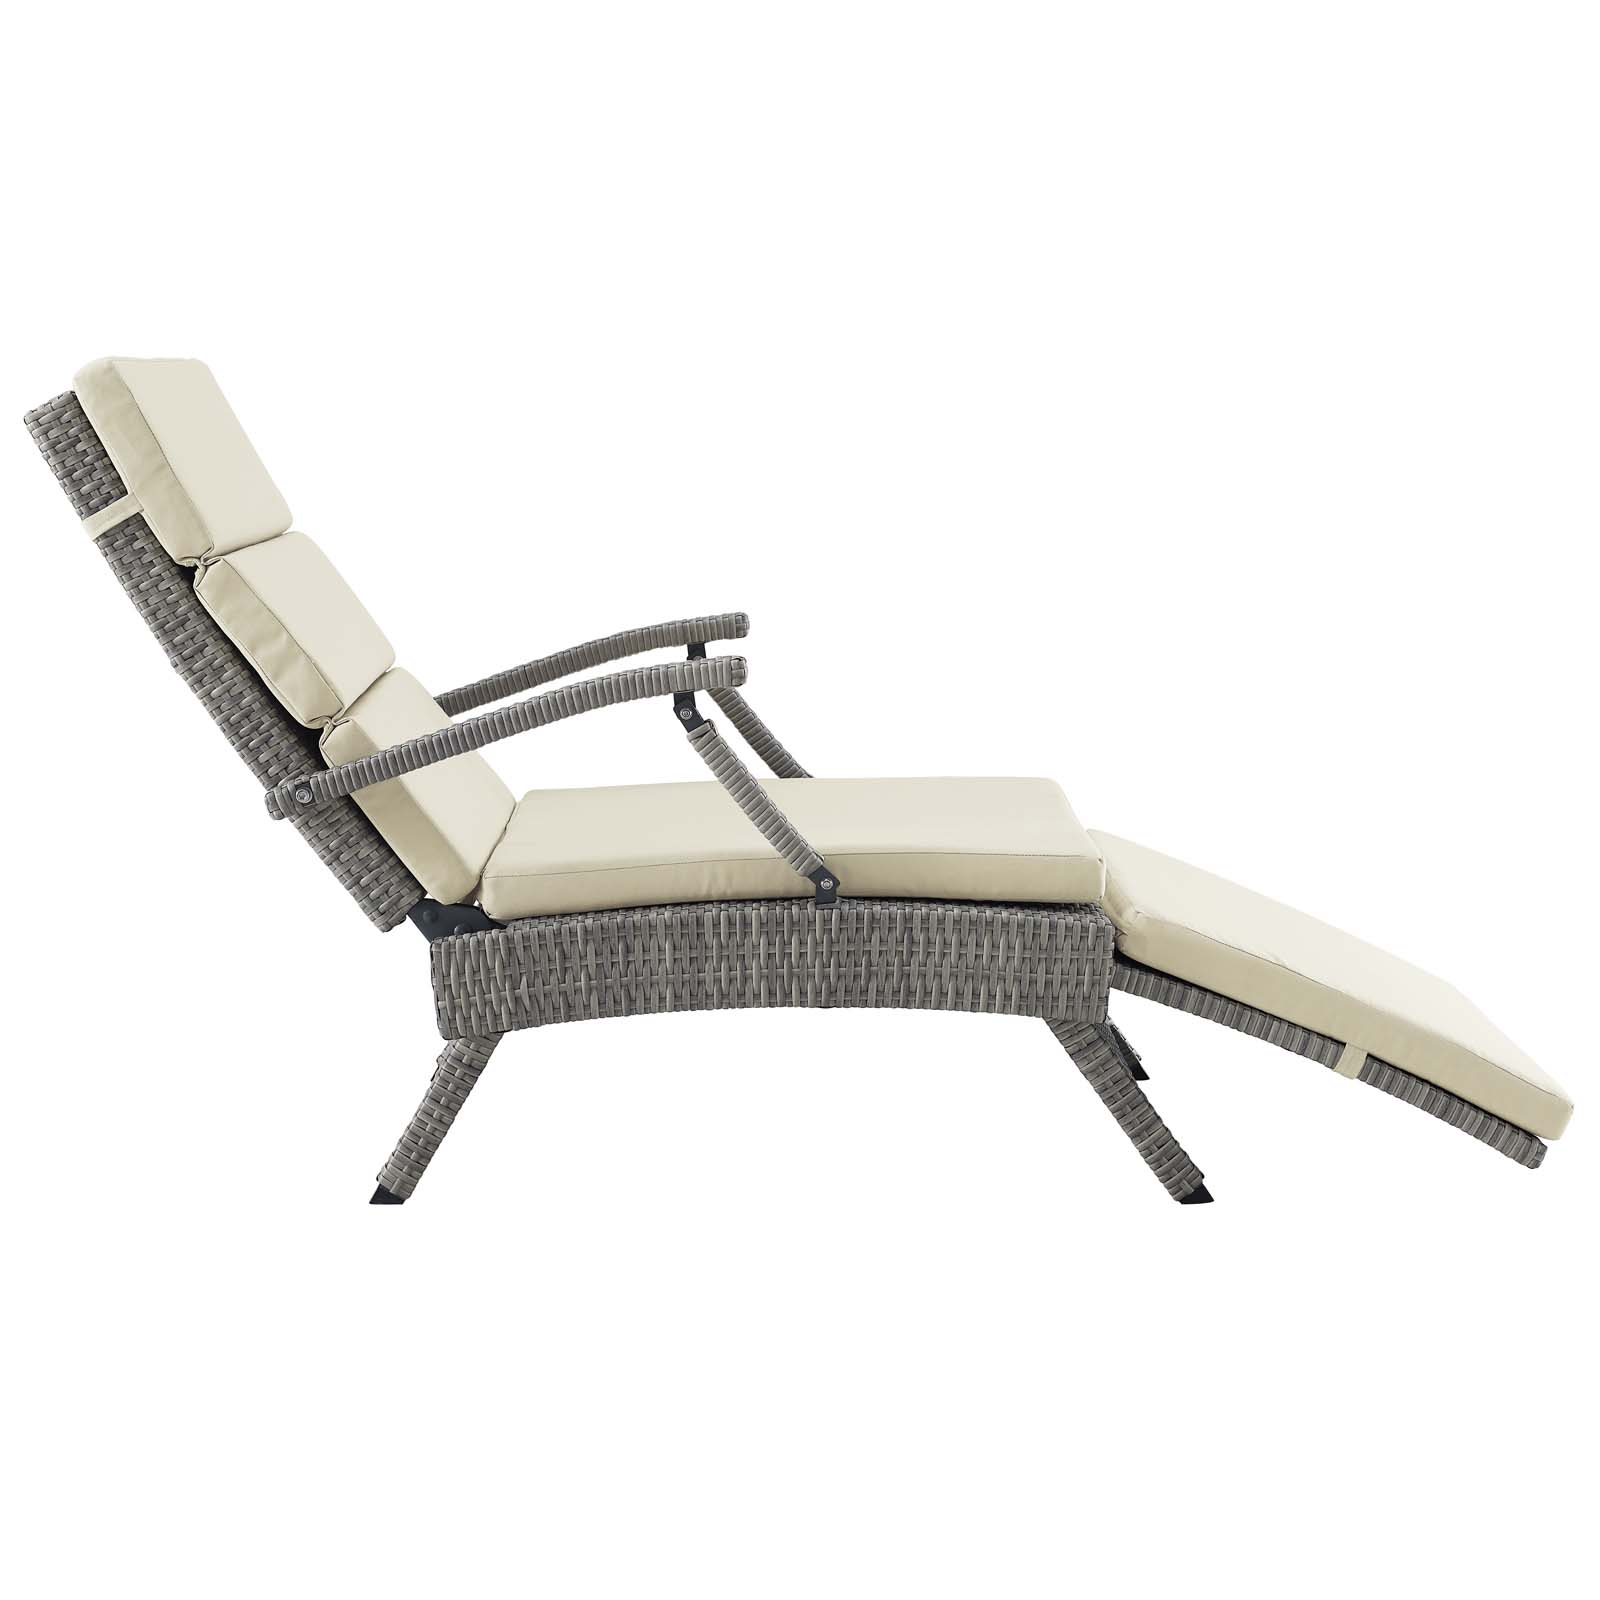 Modern Contemporary Urban Design Outdoor Patio Balcony Garden Furniture Lounge Chair Chaise, Rattan Wicker, Light Gray Beige - image 3 of 8